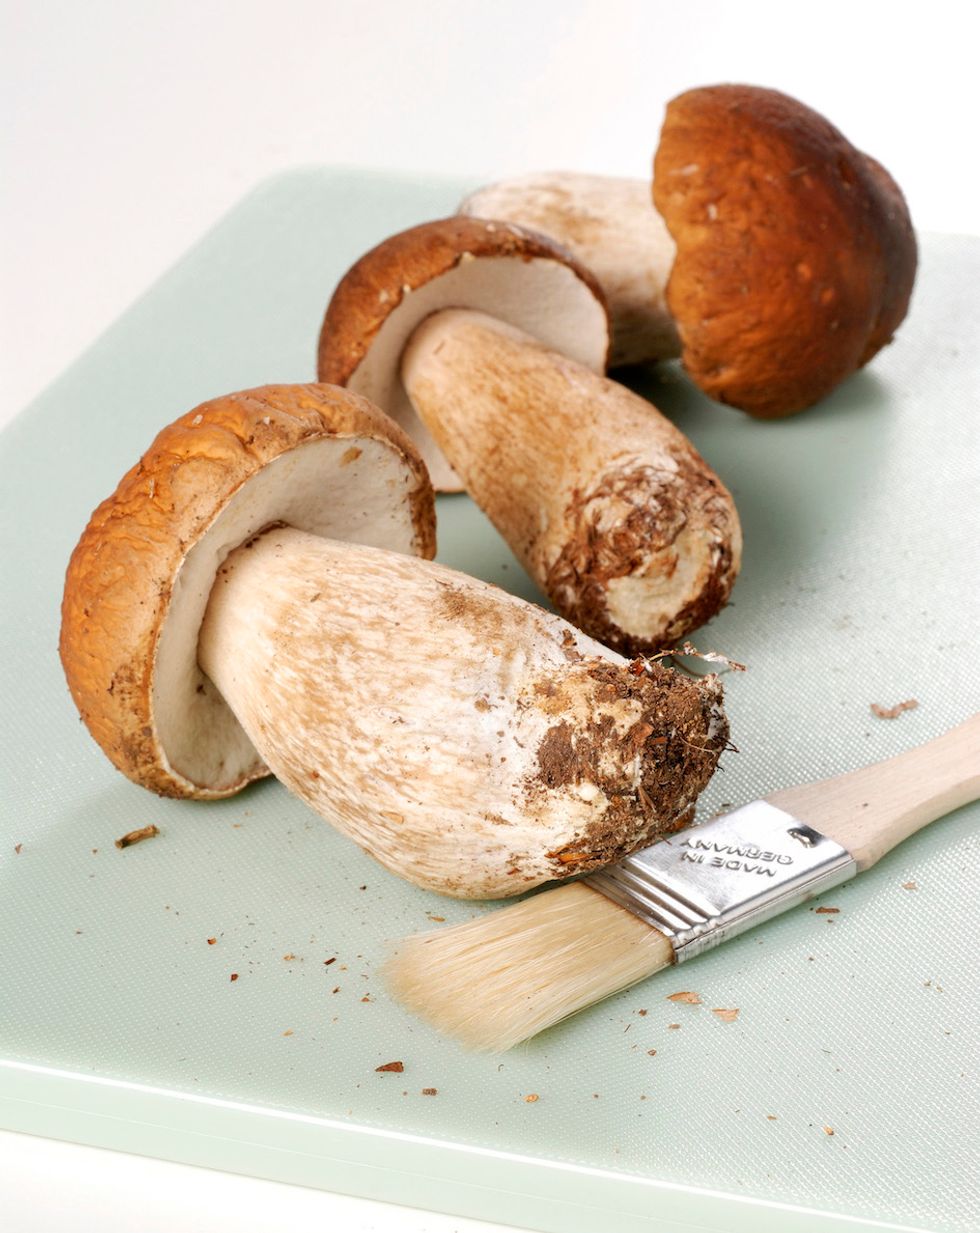 Eat mushrooms, they repair dementia